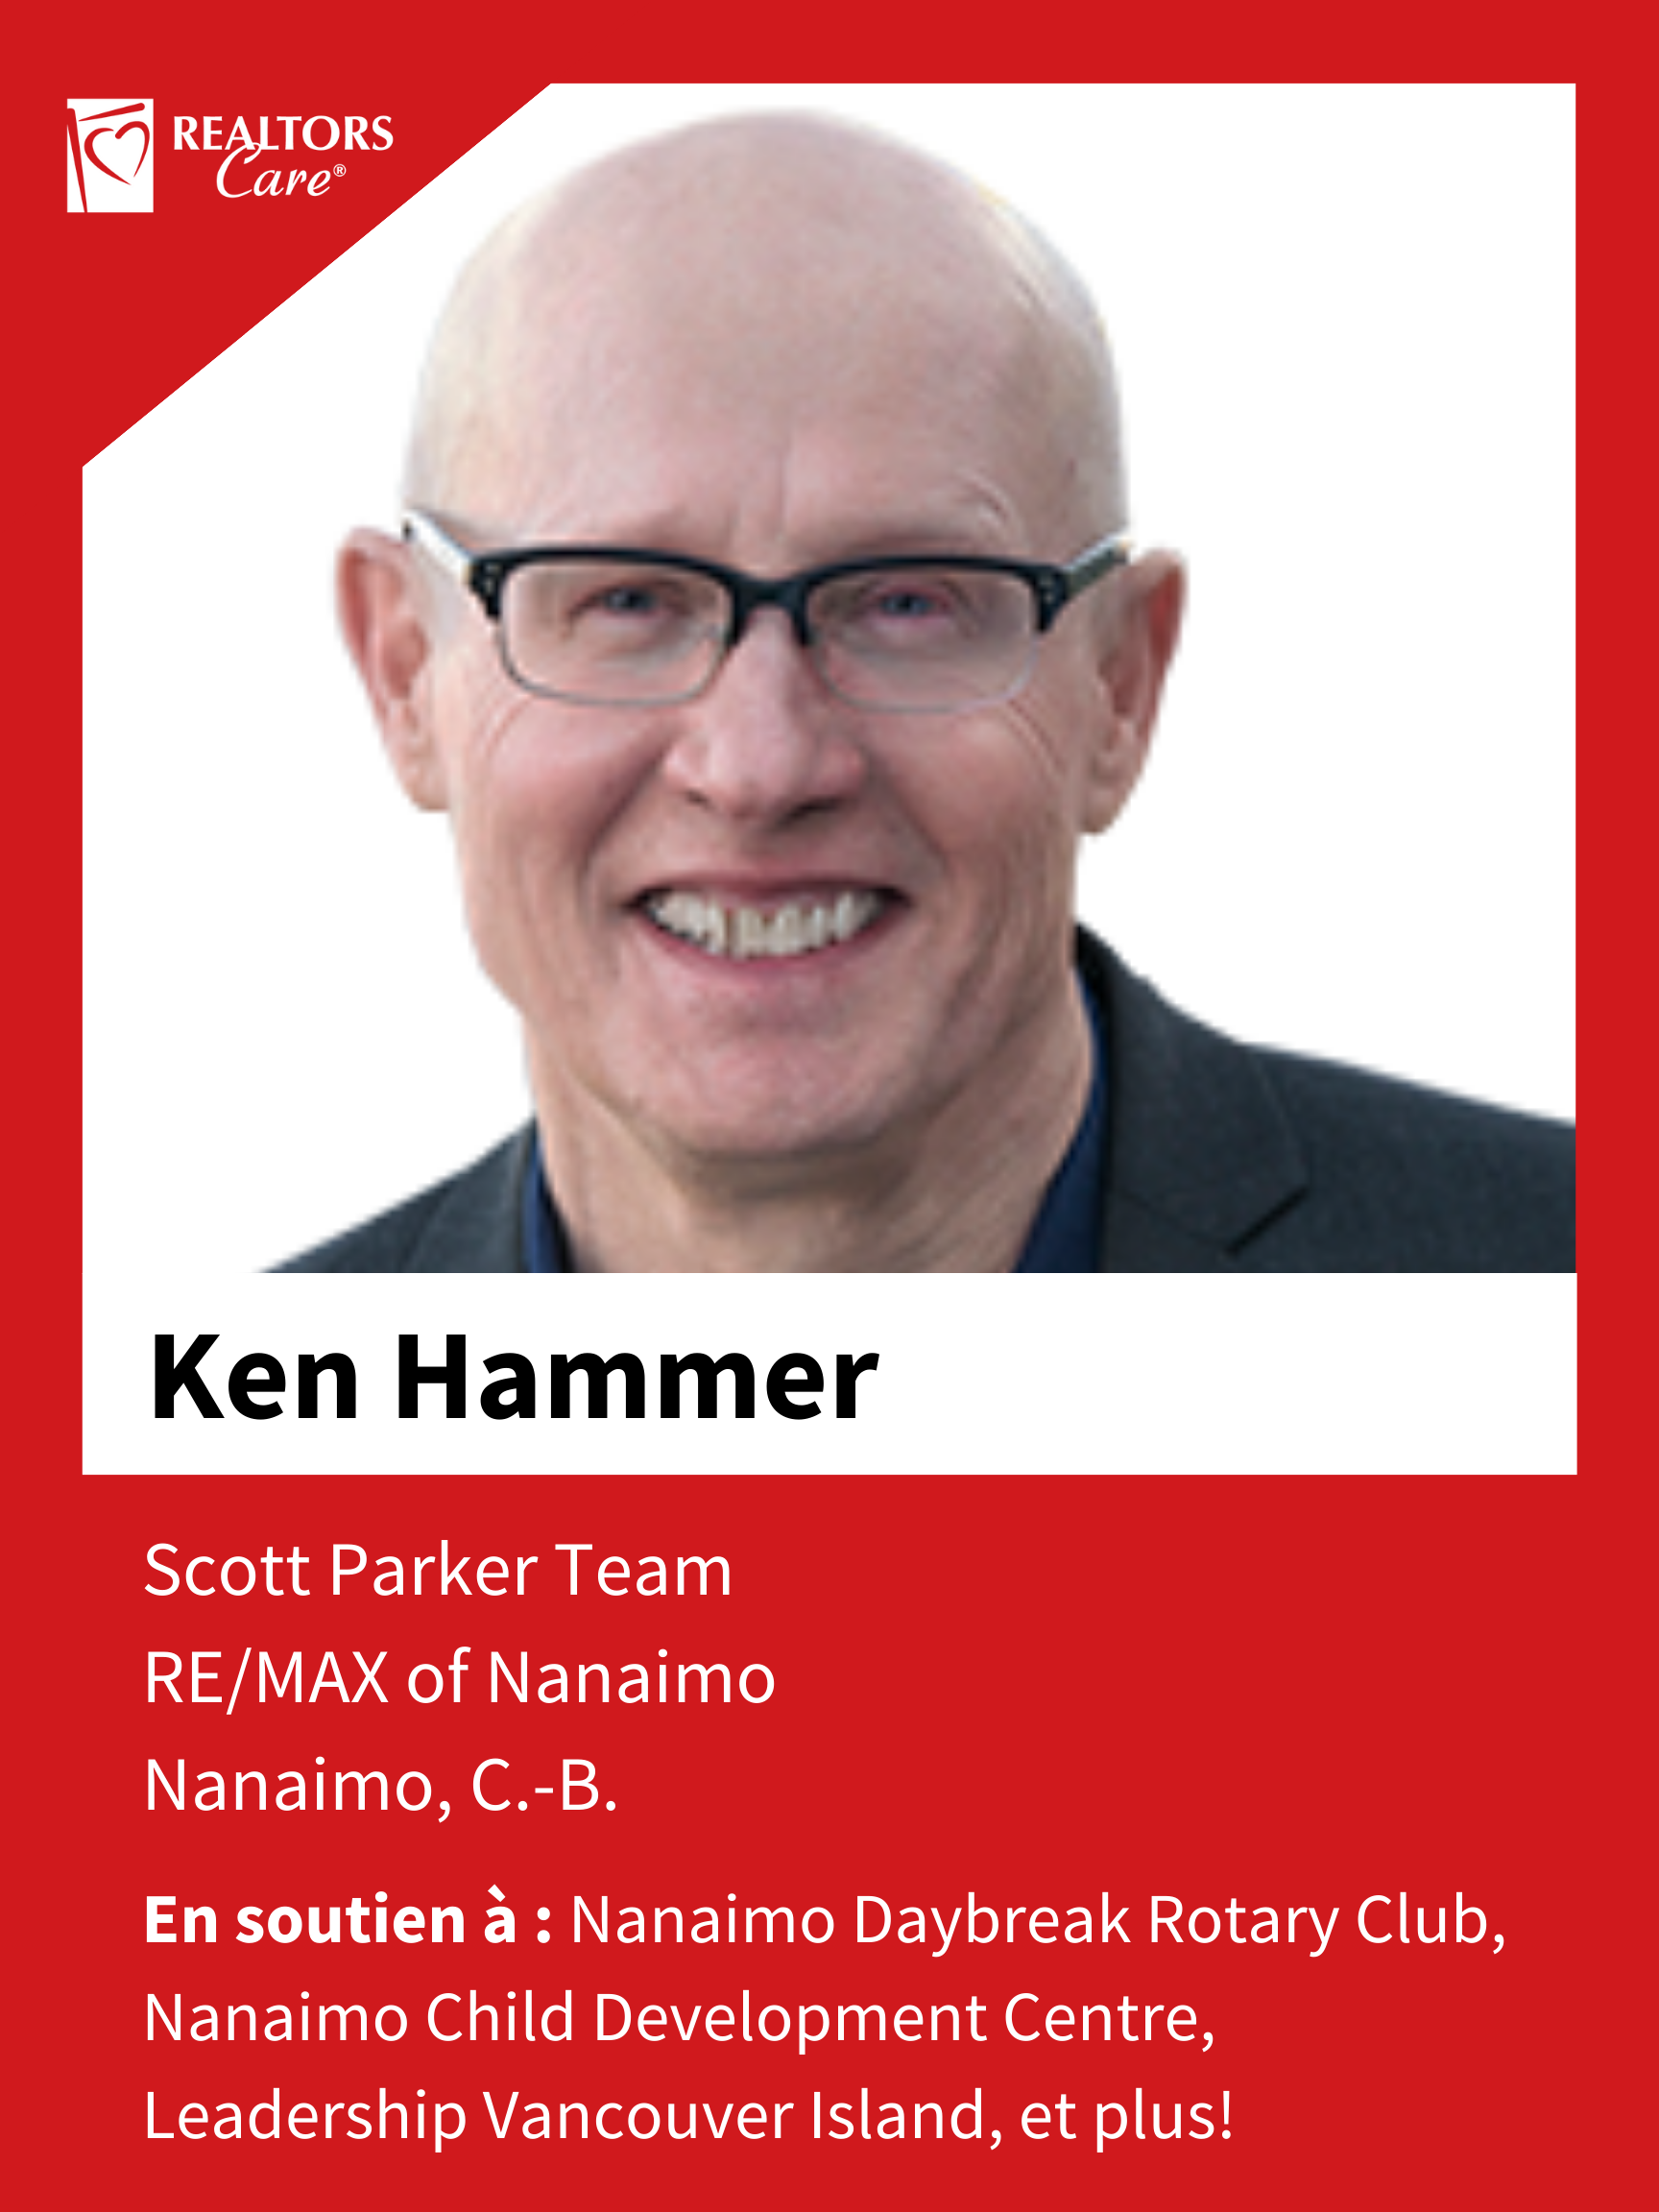 Ken Hammer
Nanaimo	C.-B.
